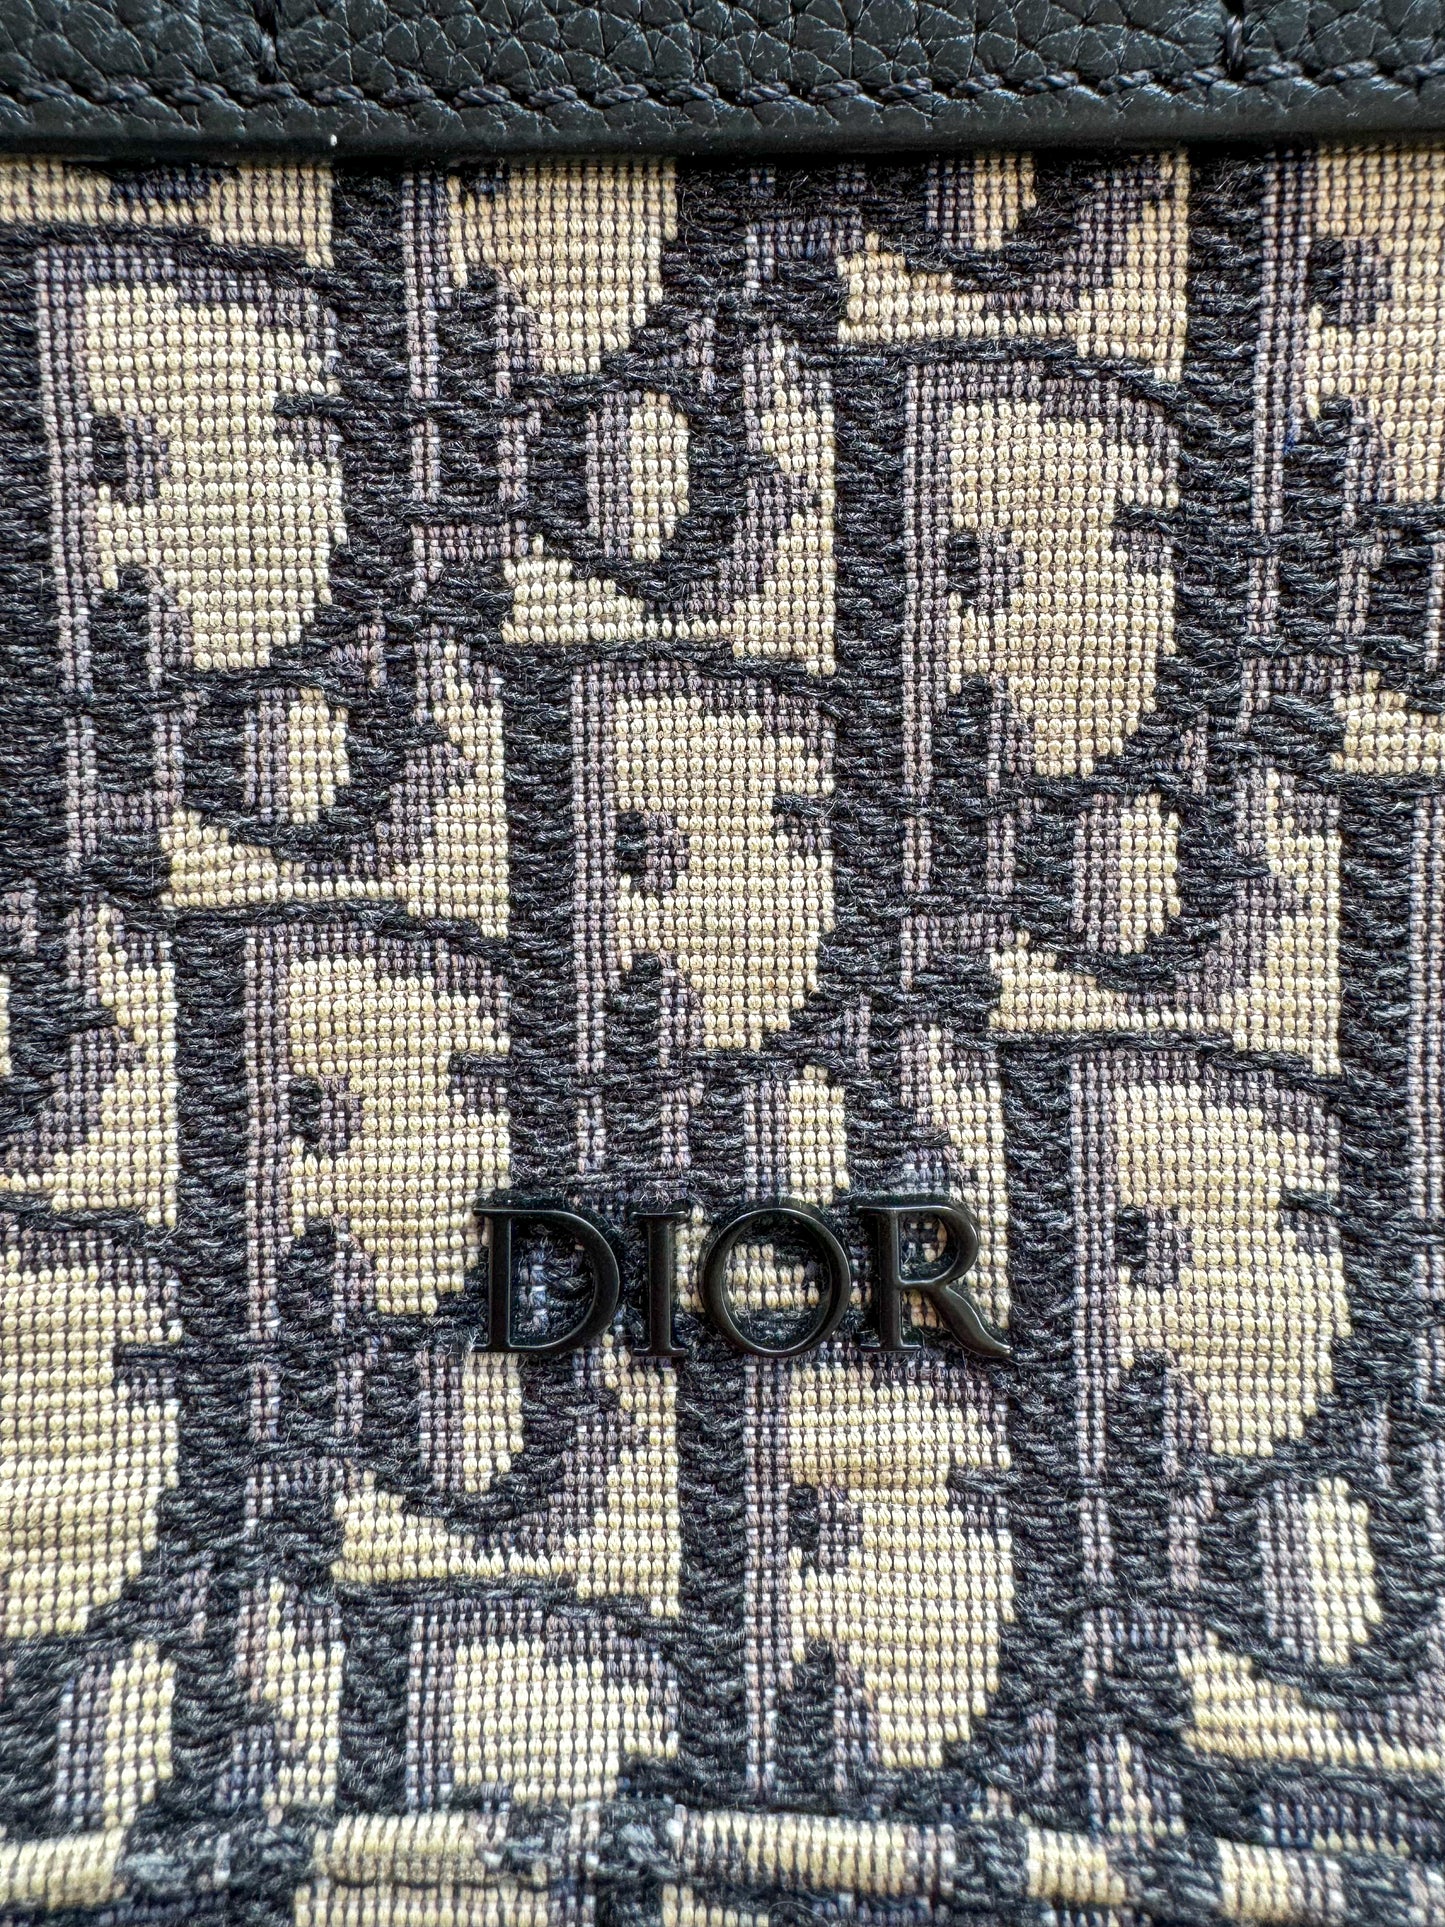 Dior Beige Oblique Safari Messenger Bag